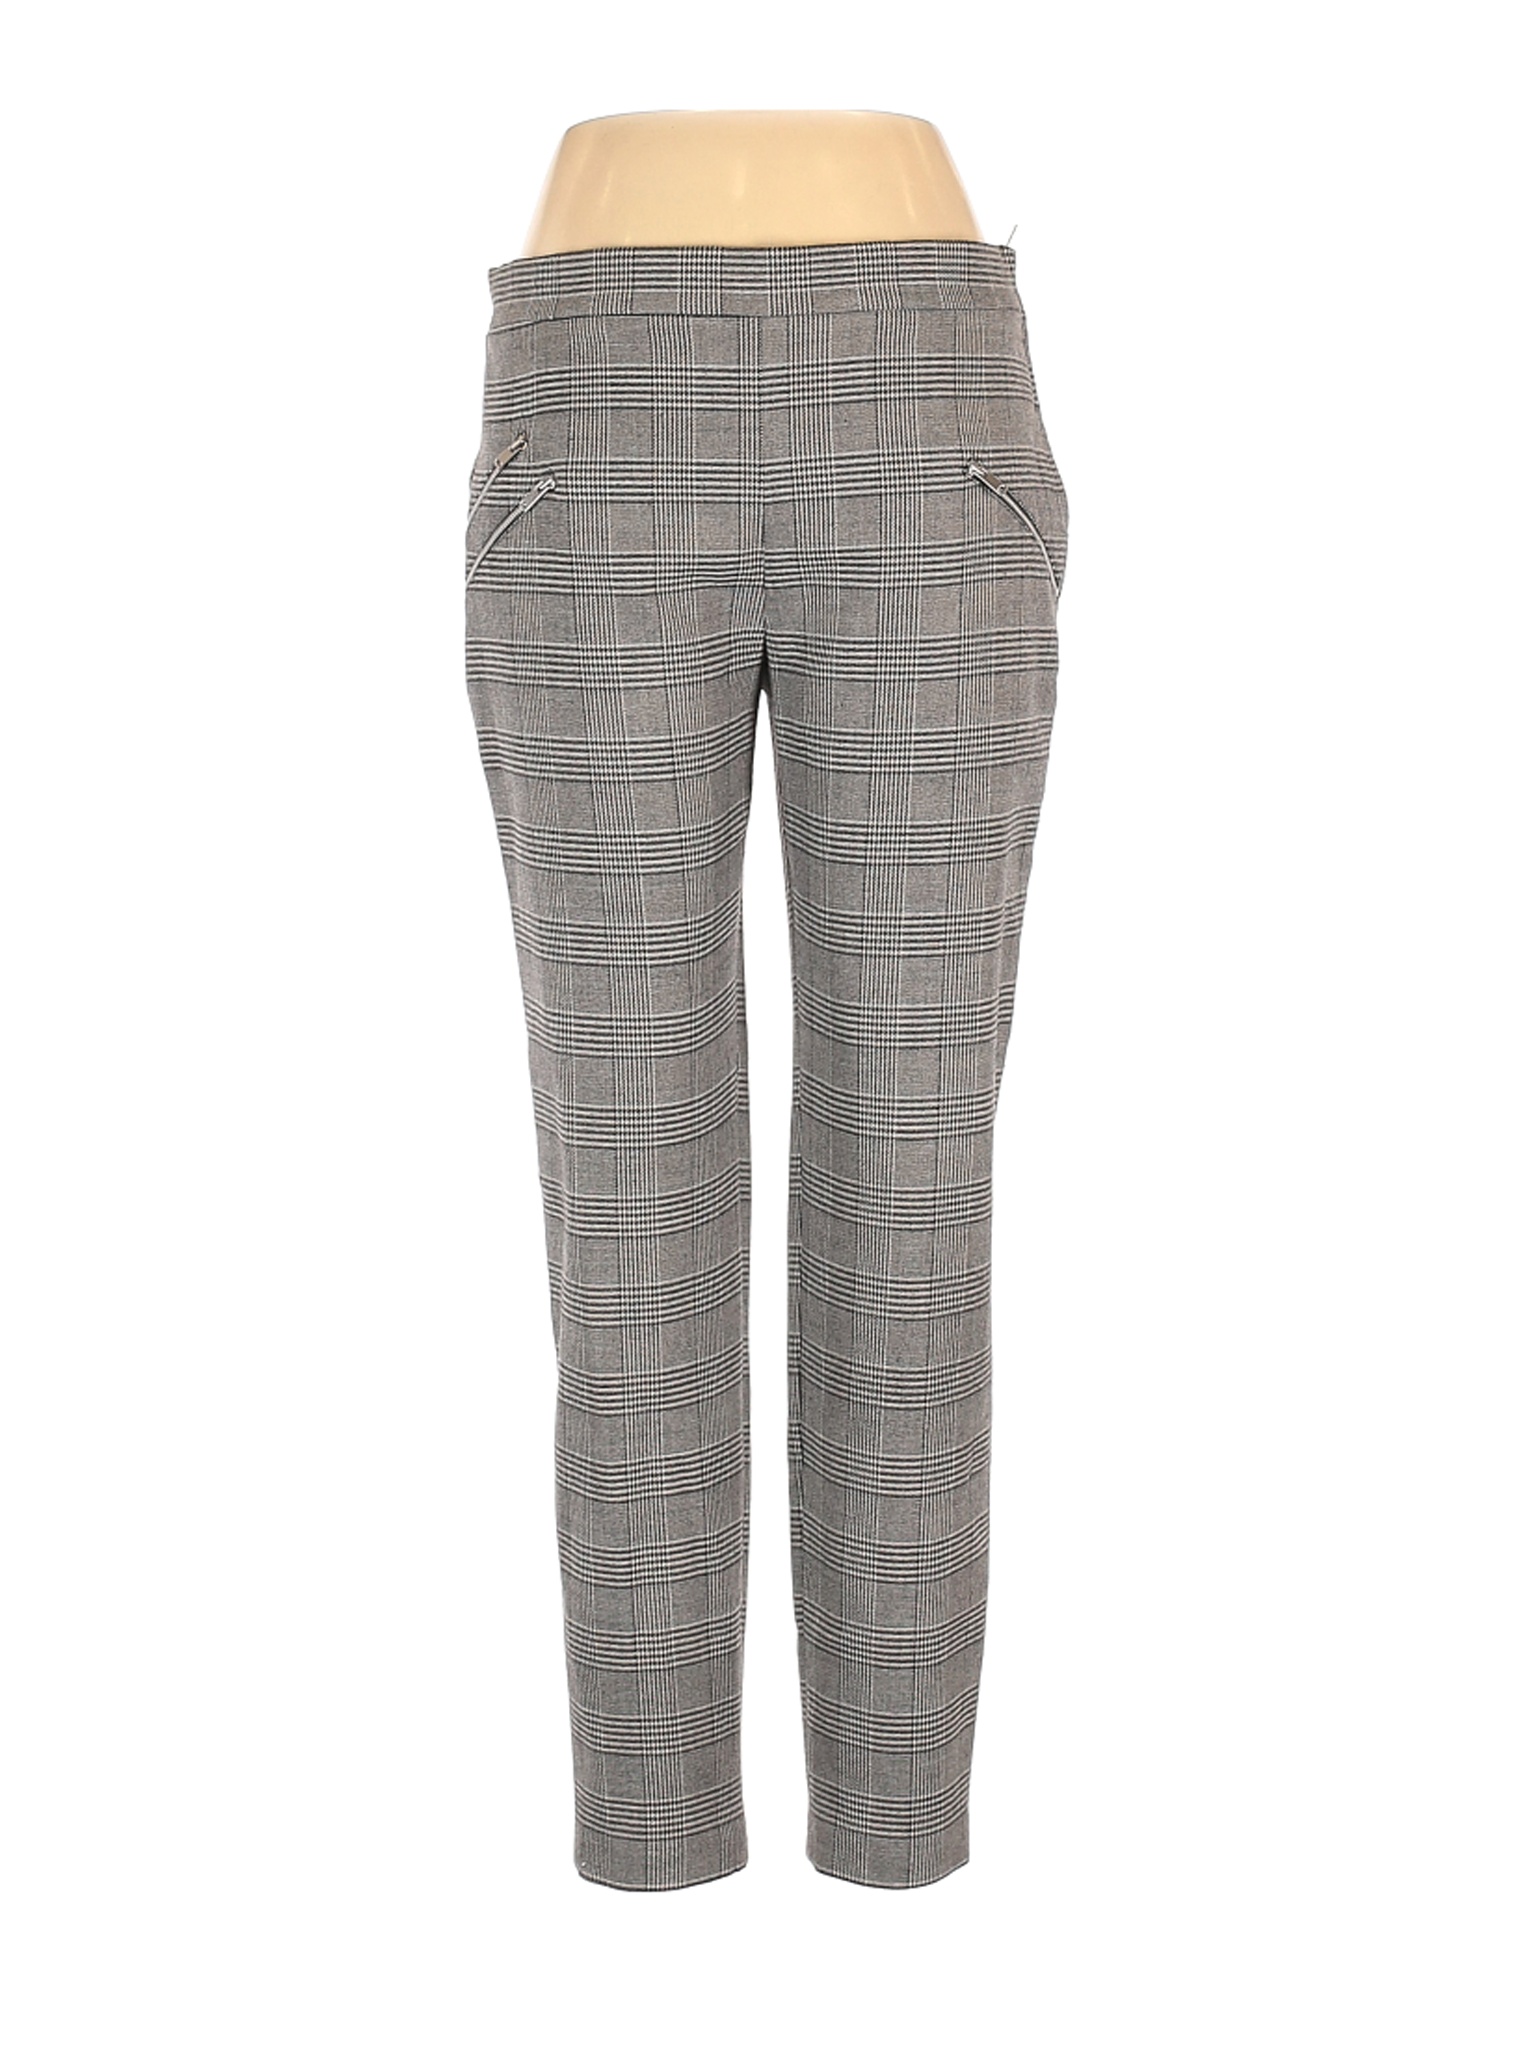 Zara Women Gray Dress Pants L | eBay